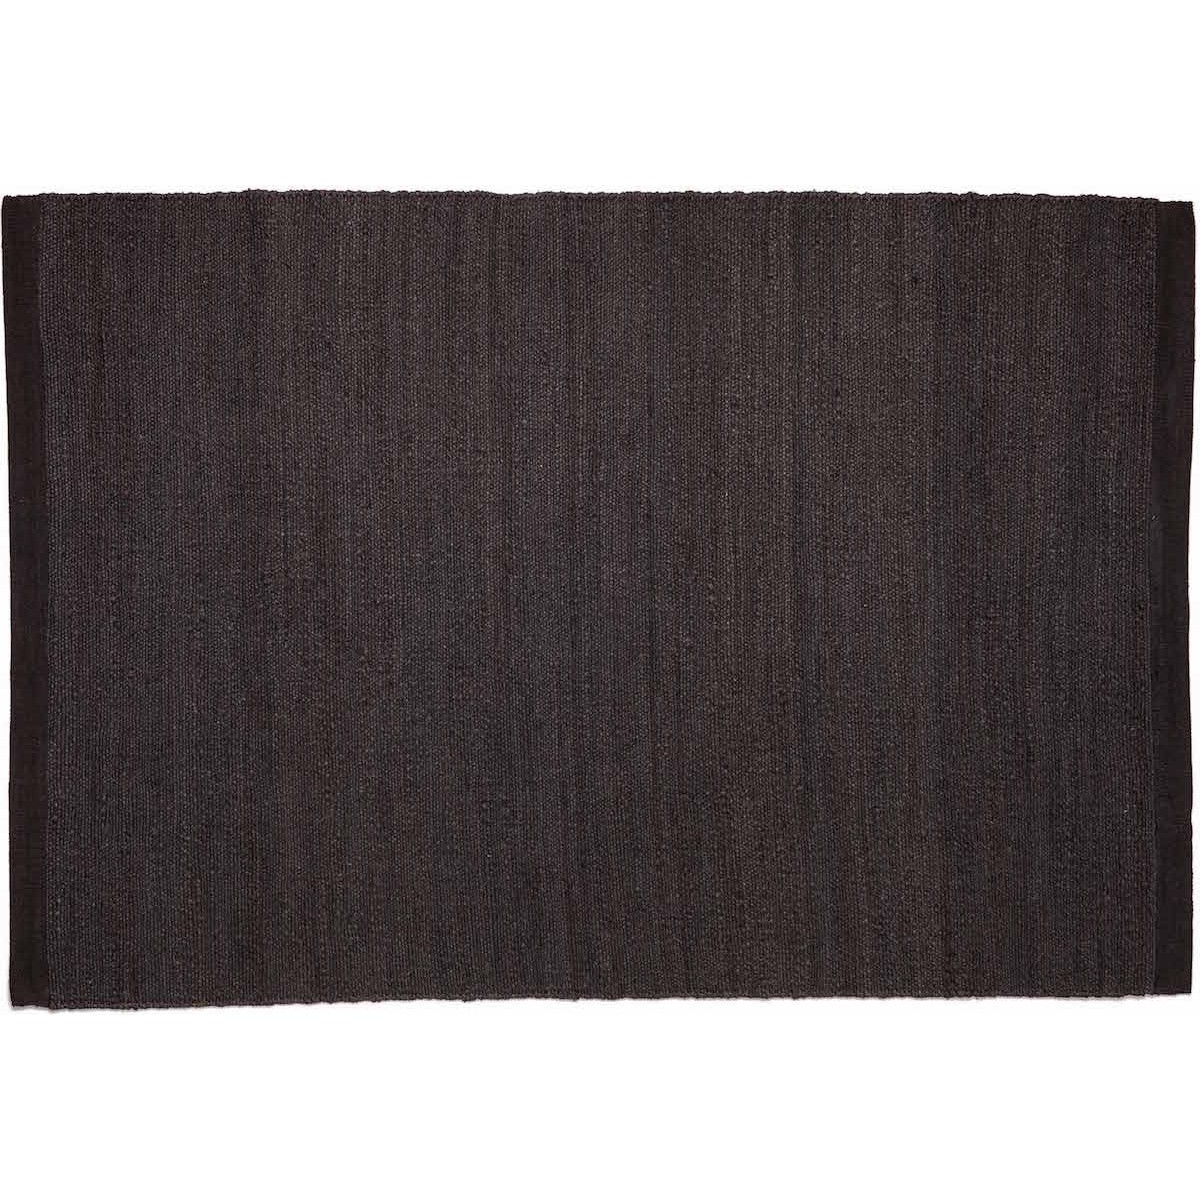 200x300cm - black - Herb rug